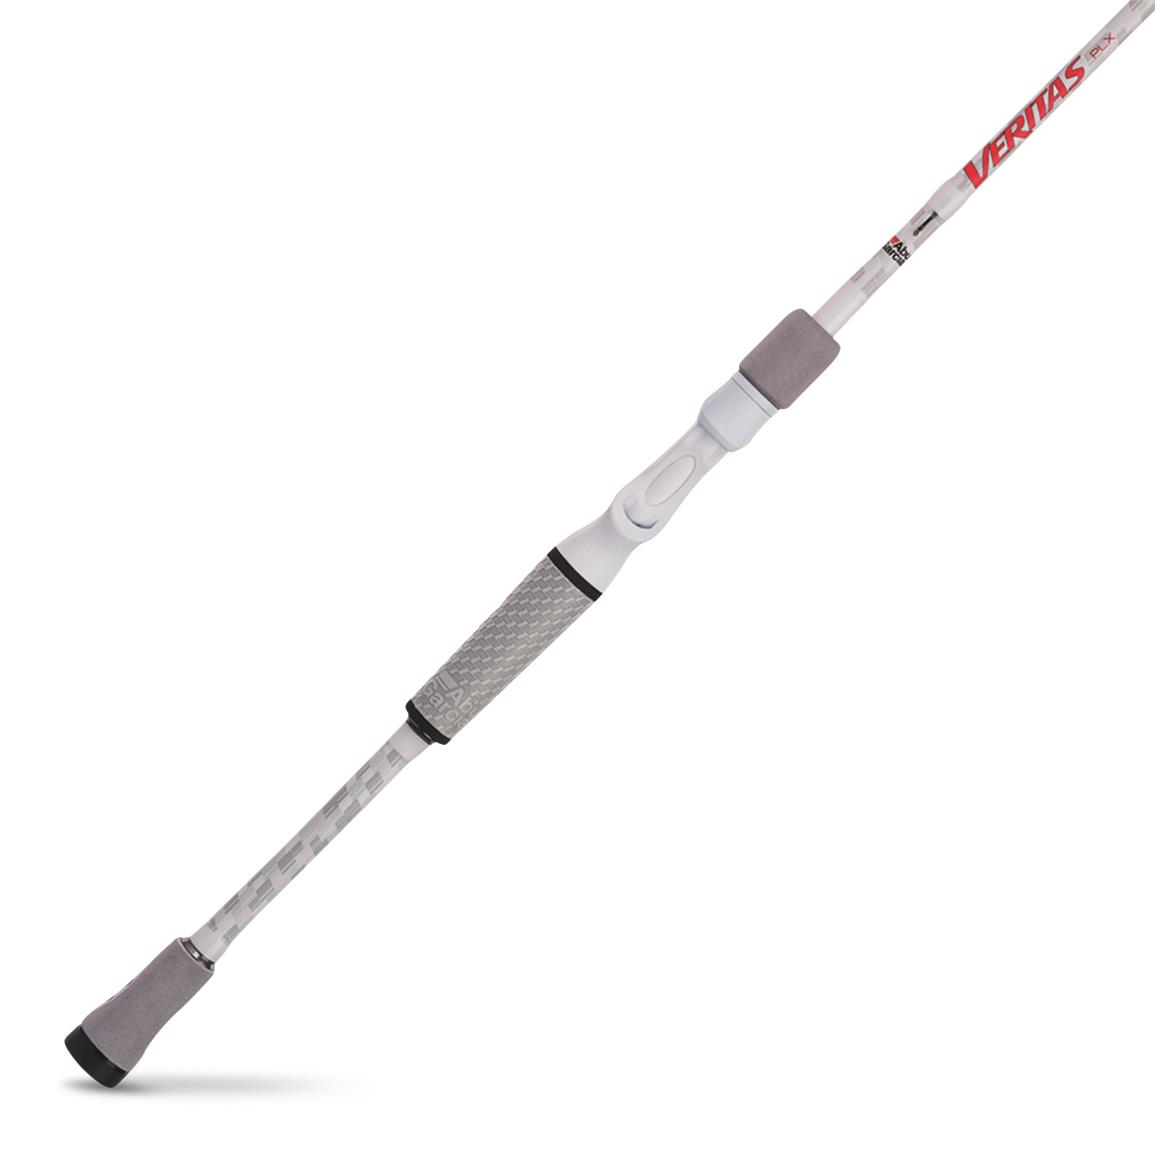 Abu Garcia Veritas LTD Casting Rod, 7'3" Length, Medium Heavy Power, Fast Action